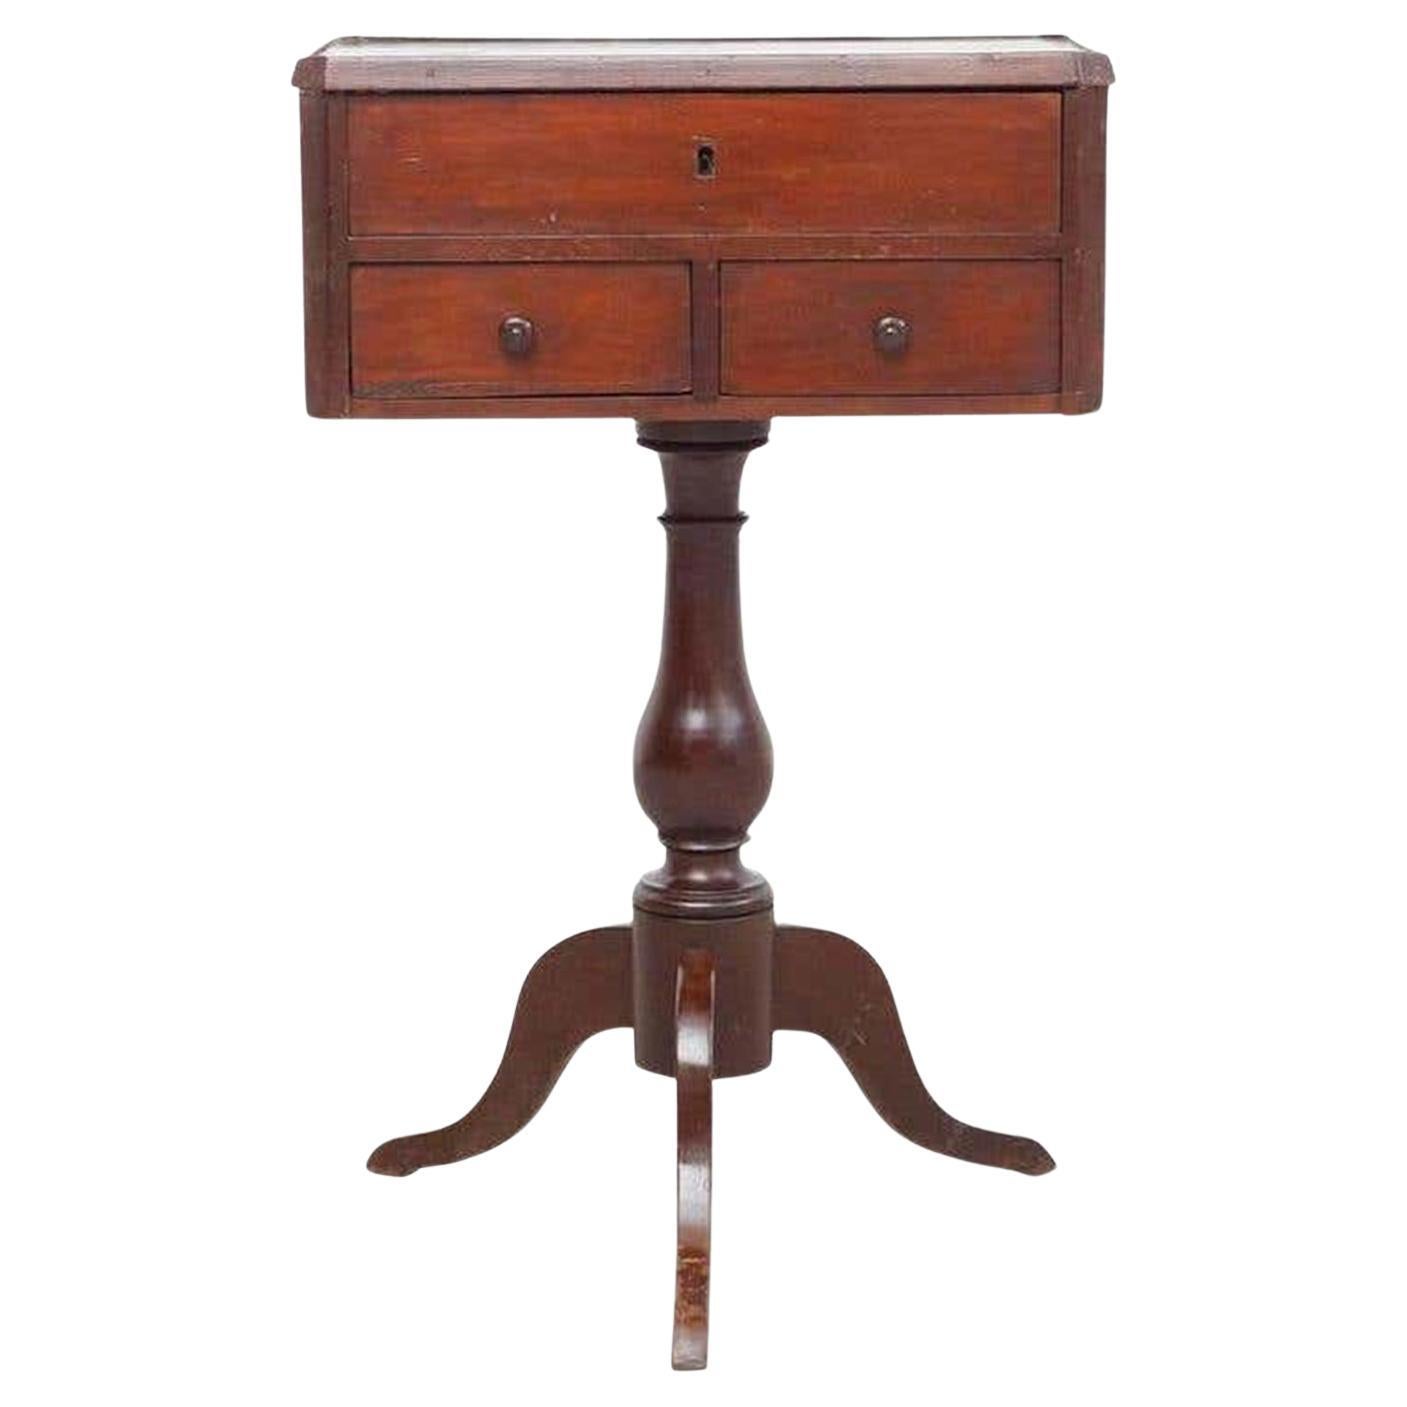 Table de couture en Wood, vers 1800